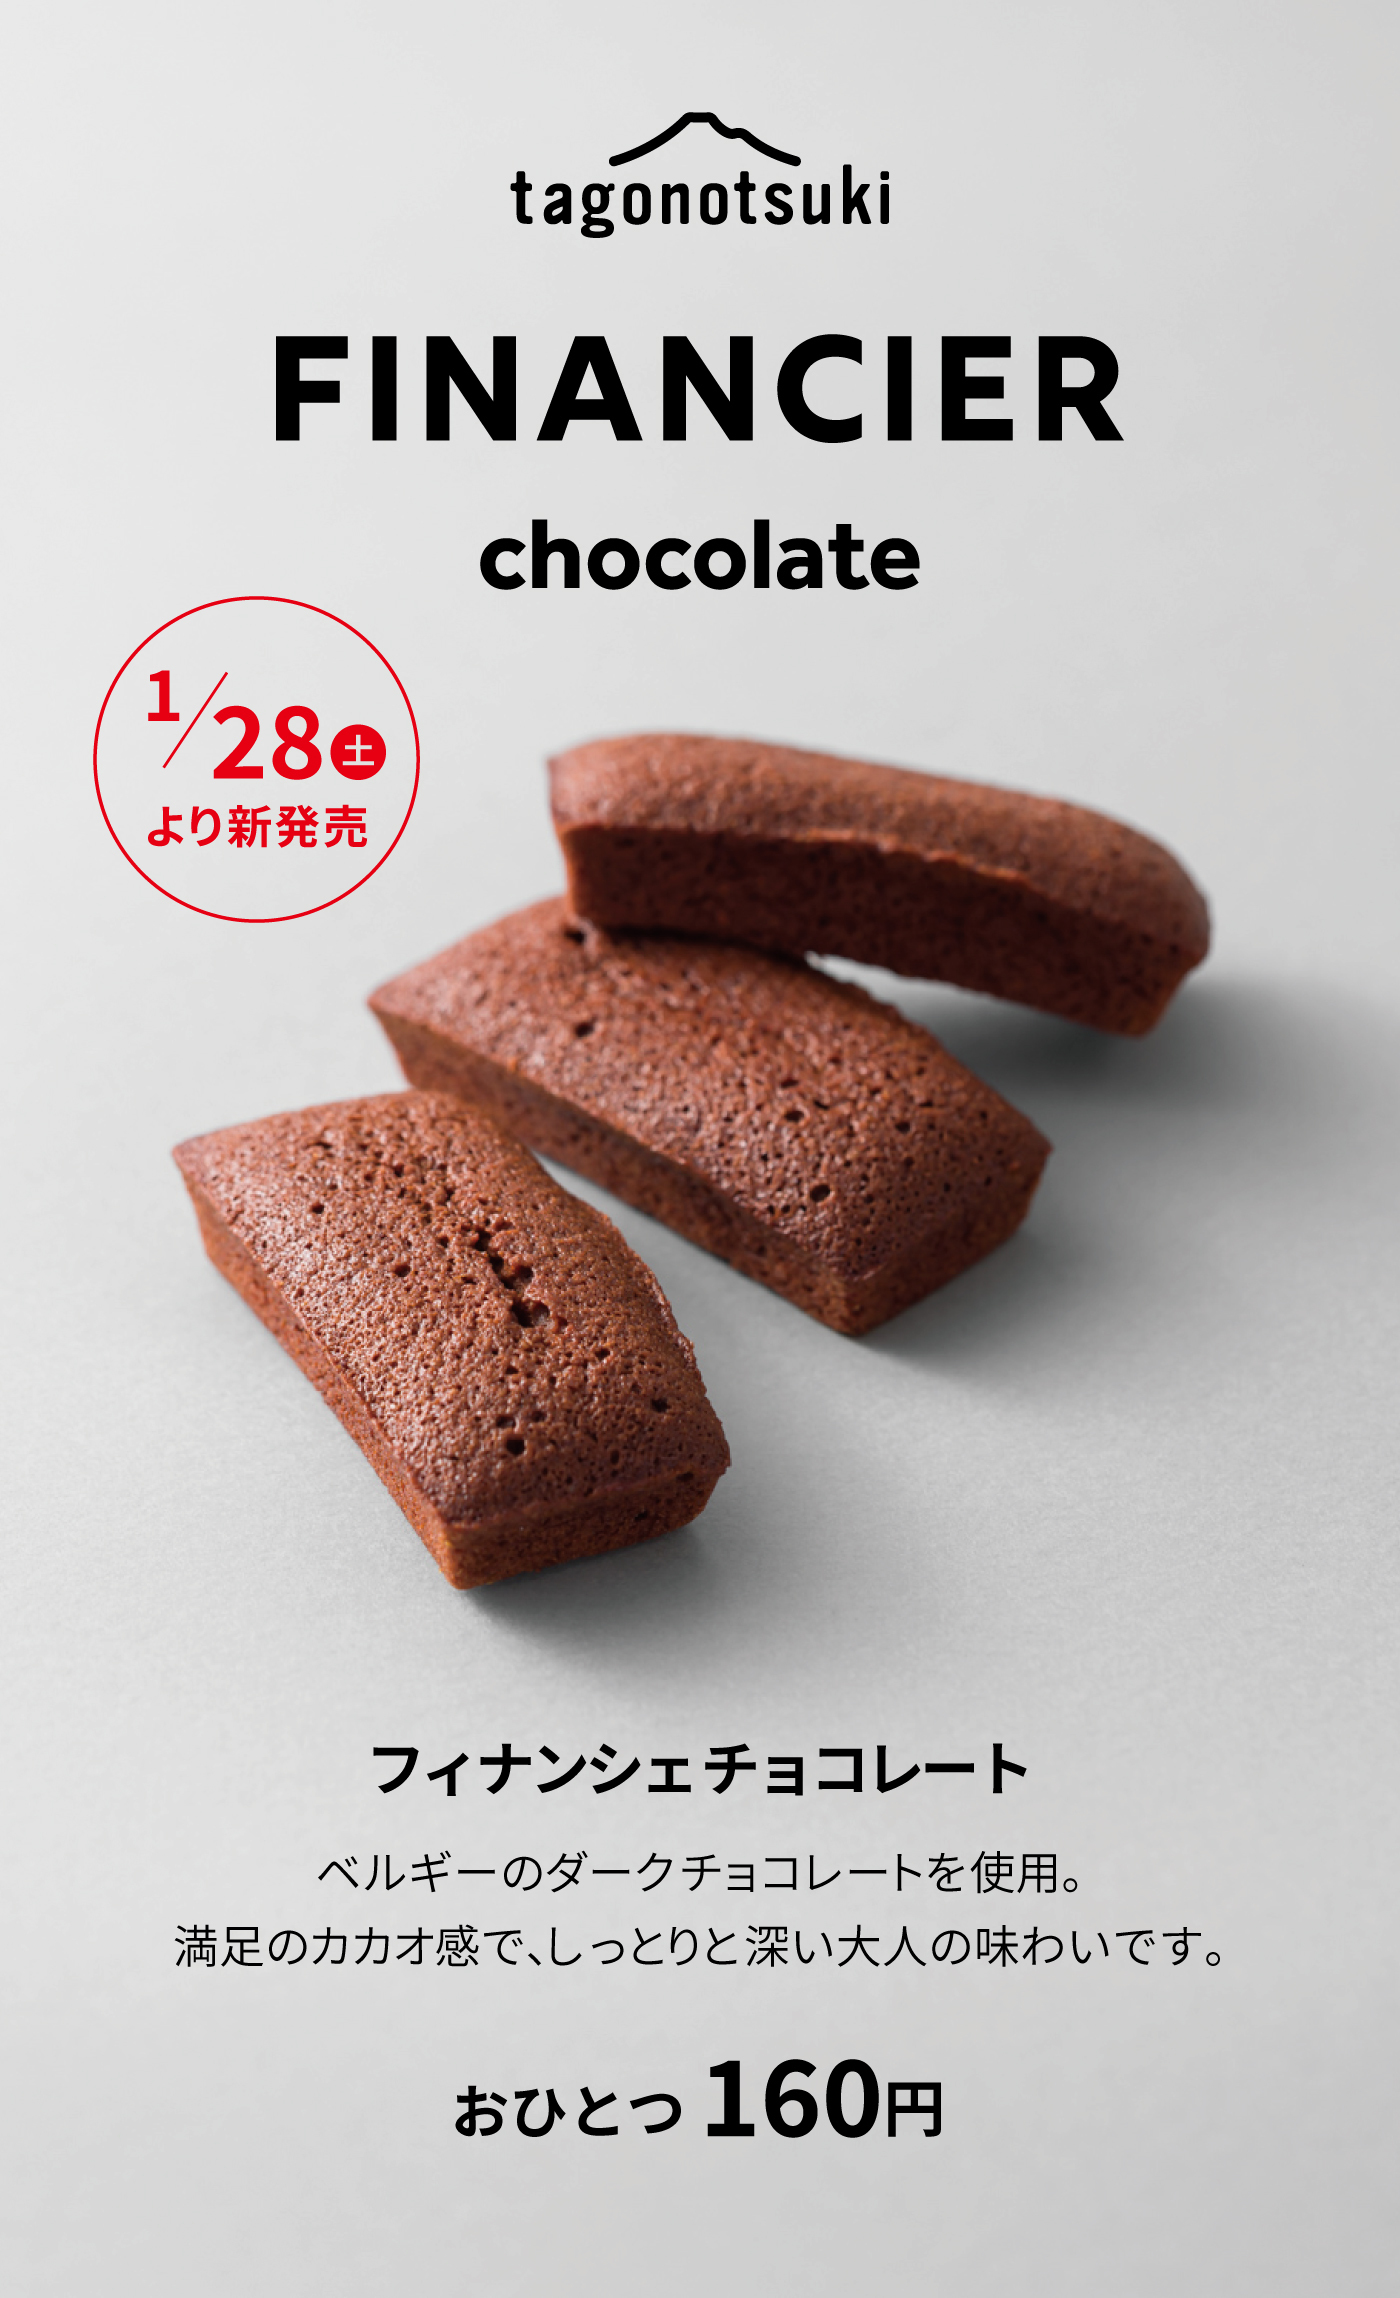 tagonotsukiFINANCIERchocolate1/28土より新発売フィナンシェチョコレートベルギーのダークチョコレートを使用。満足のカカオ感で、しっとりと深い大人の味わいです。おひとつ160円